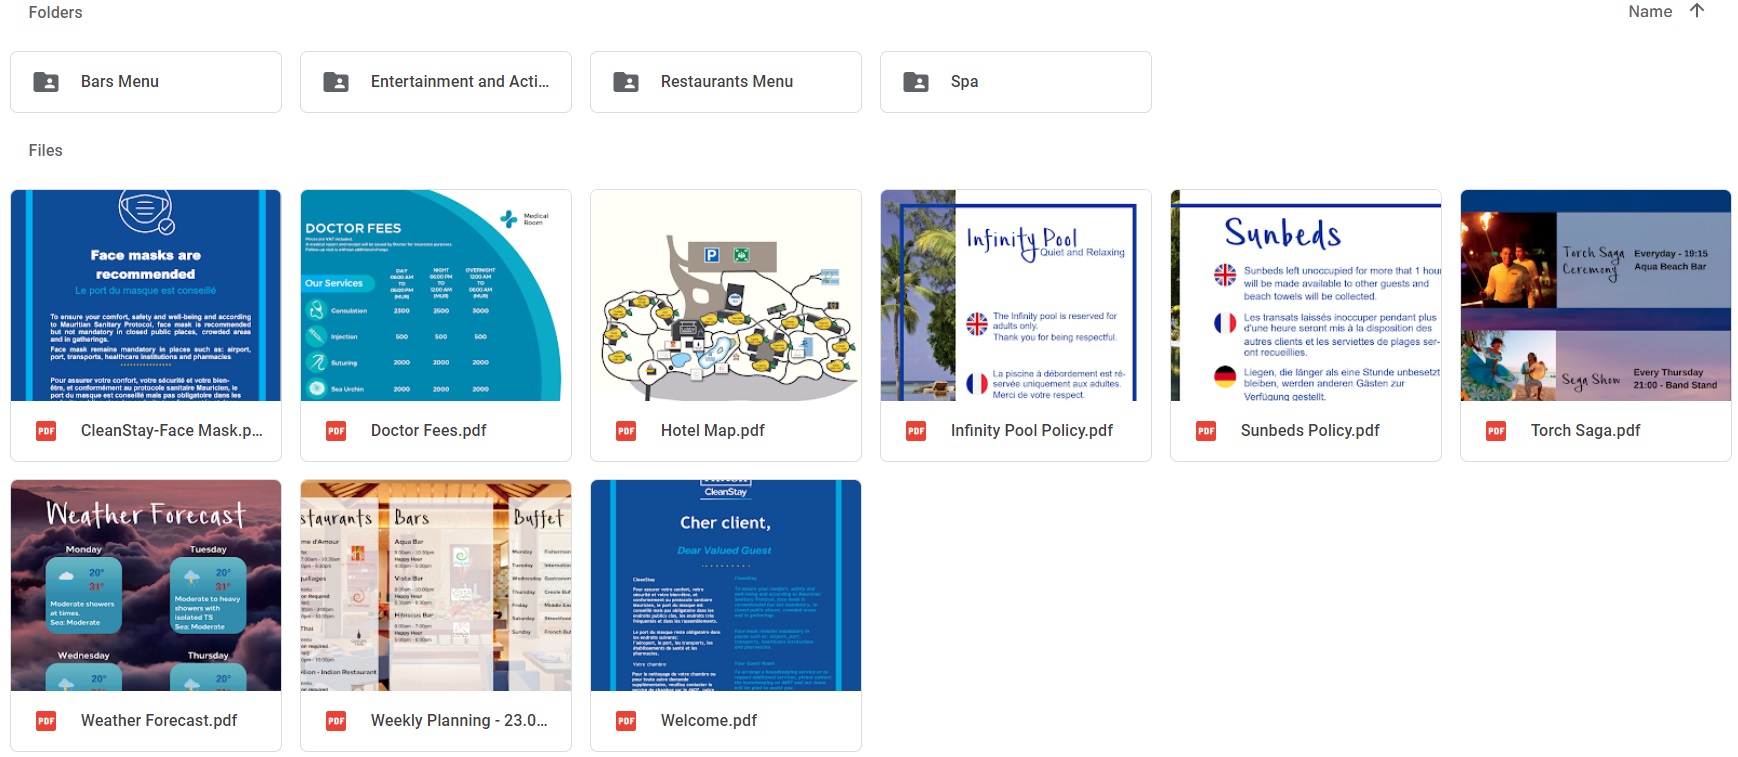 Hilton Mauritius Resort & Spa - What the Google Drive folder looks like